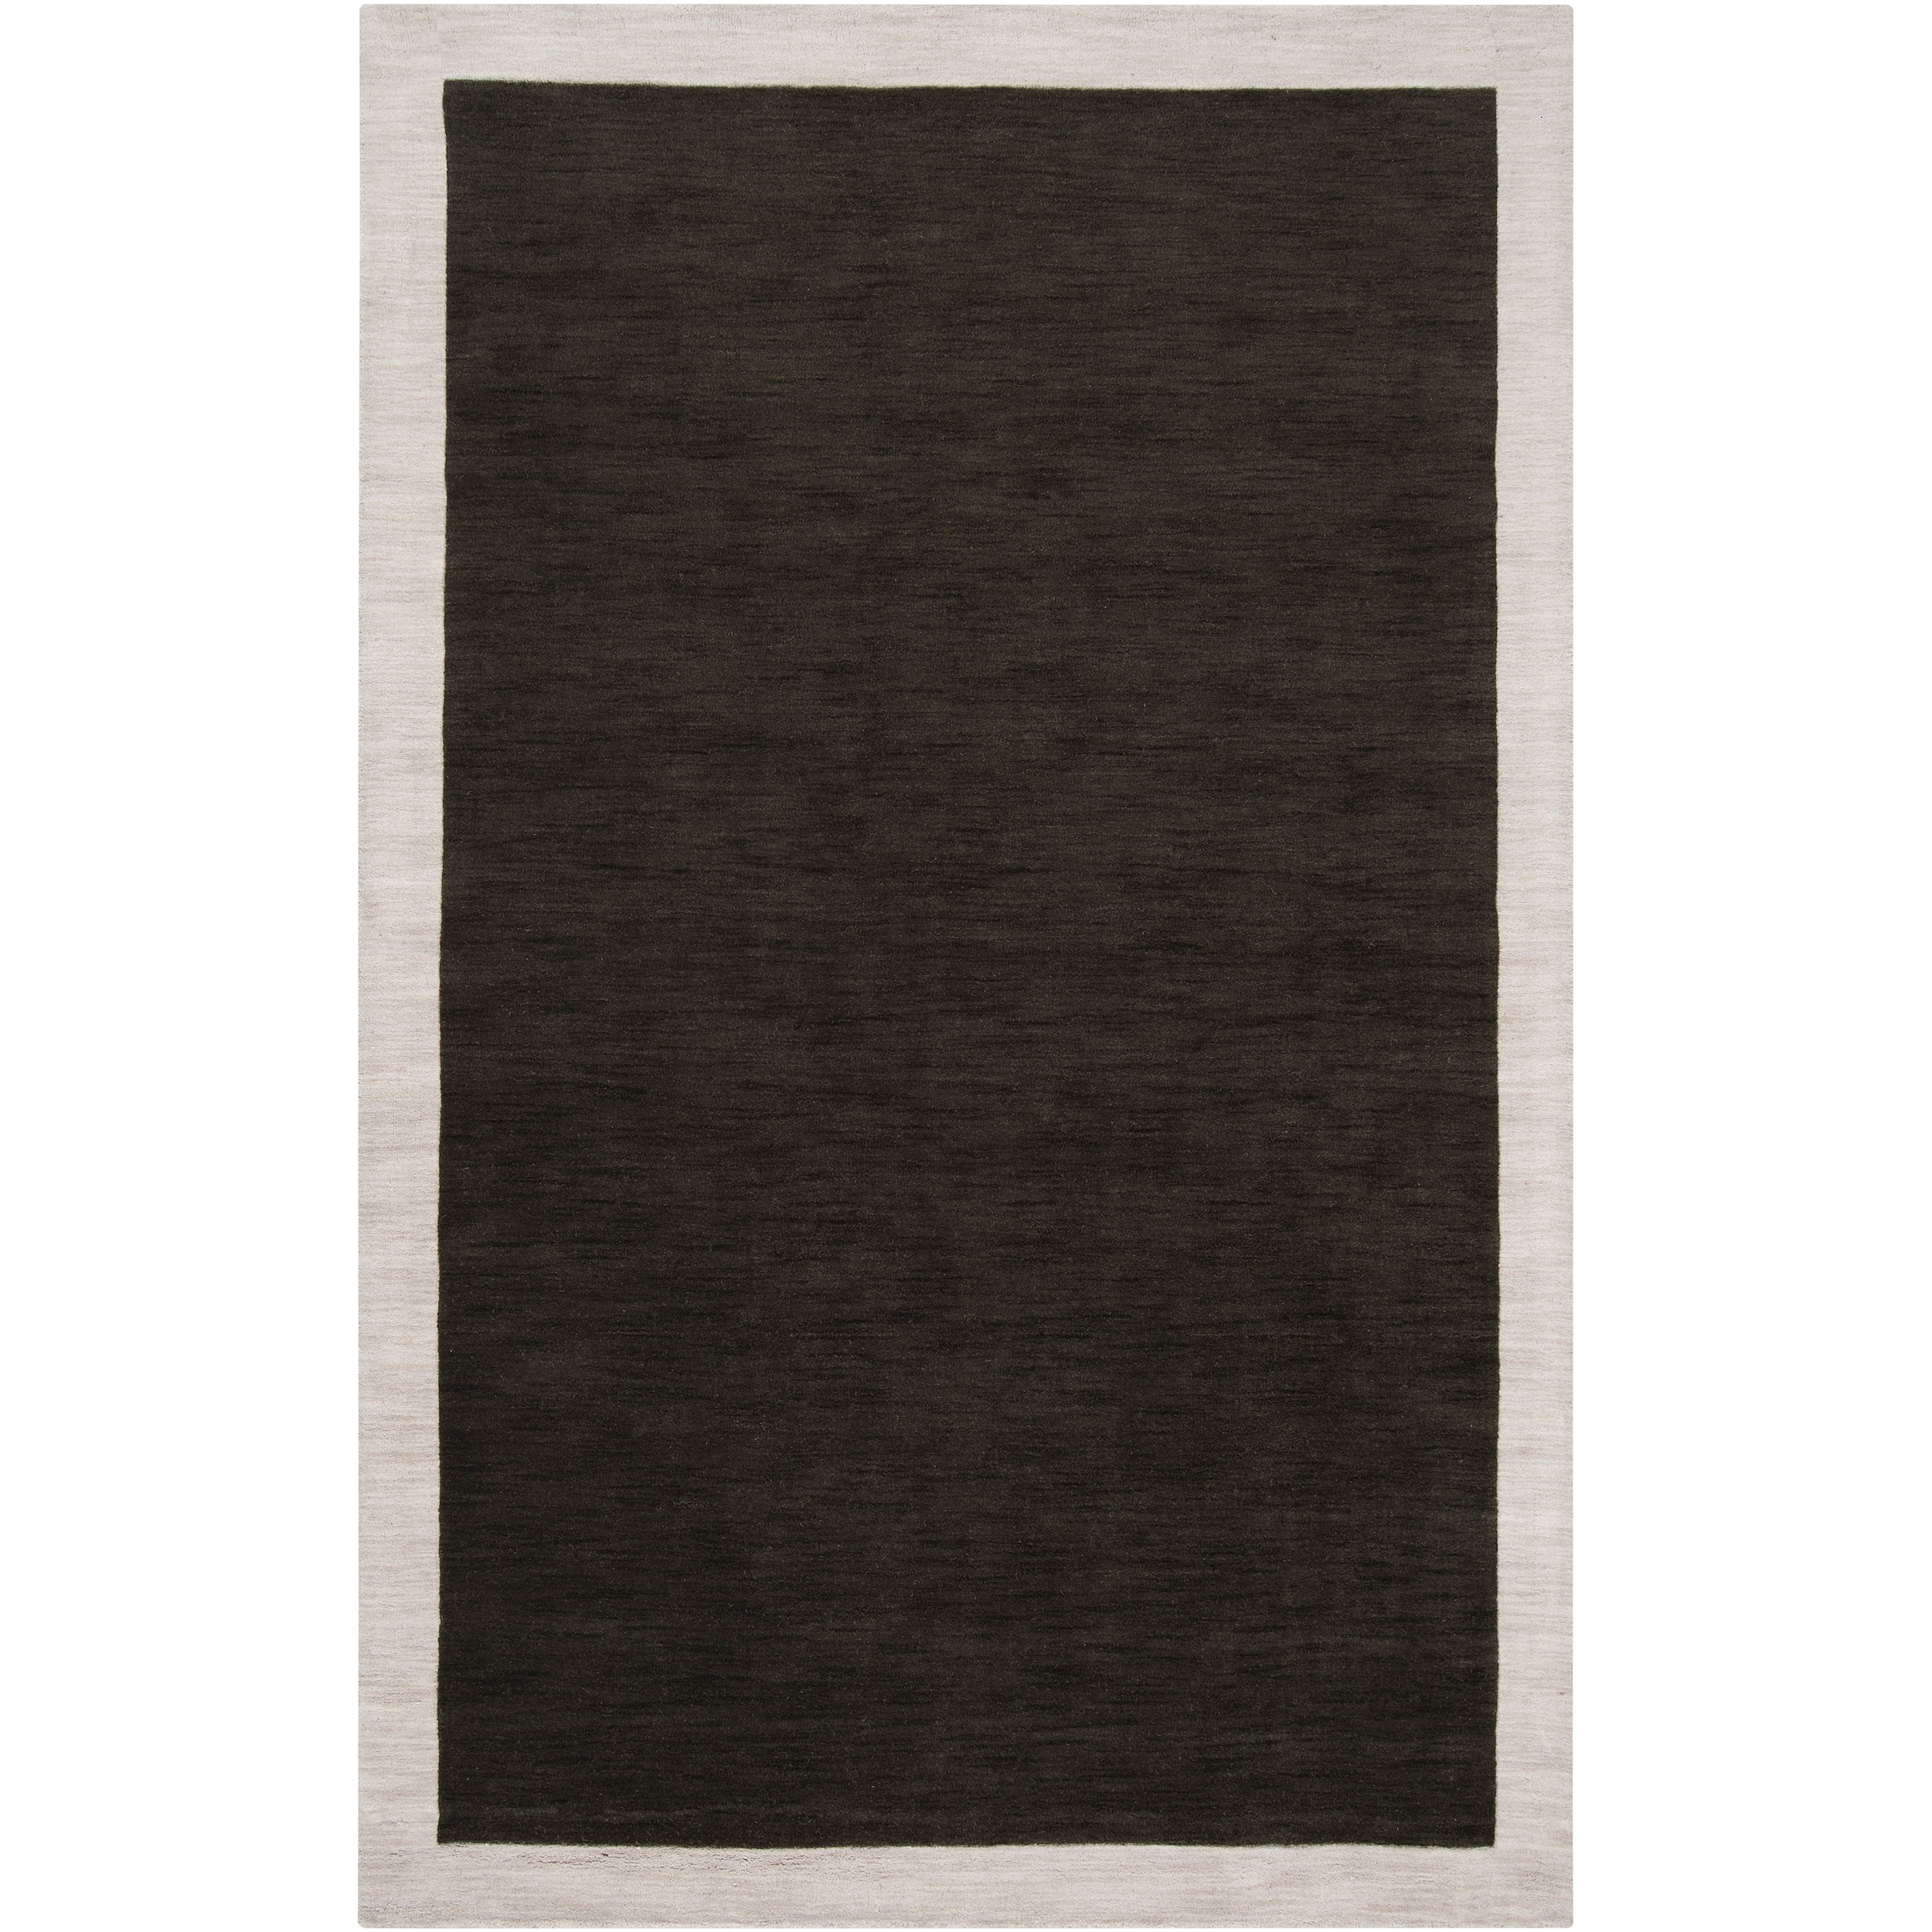 Angelohome Loomed Black Madison Square Wool Rug (2 X 3)